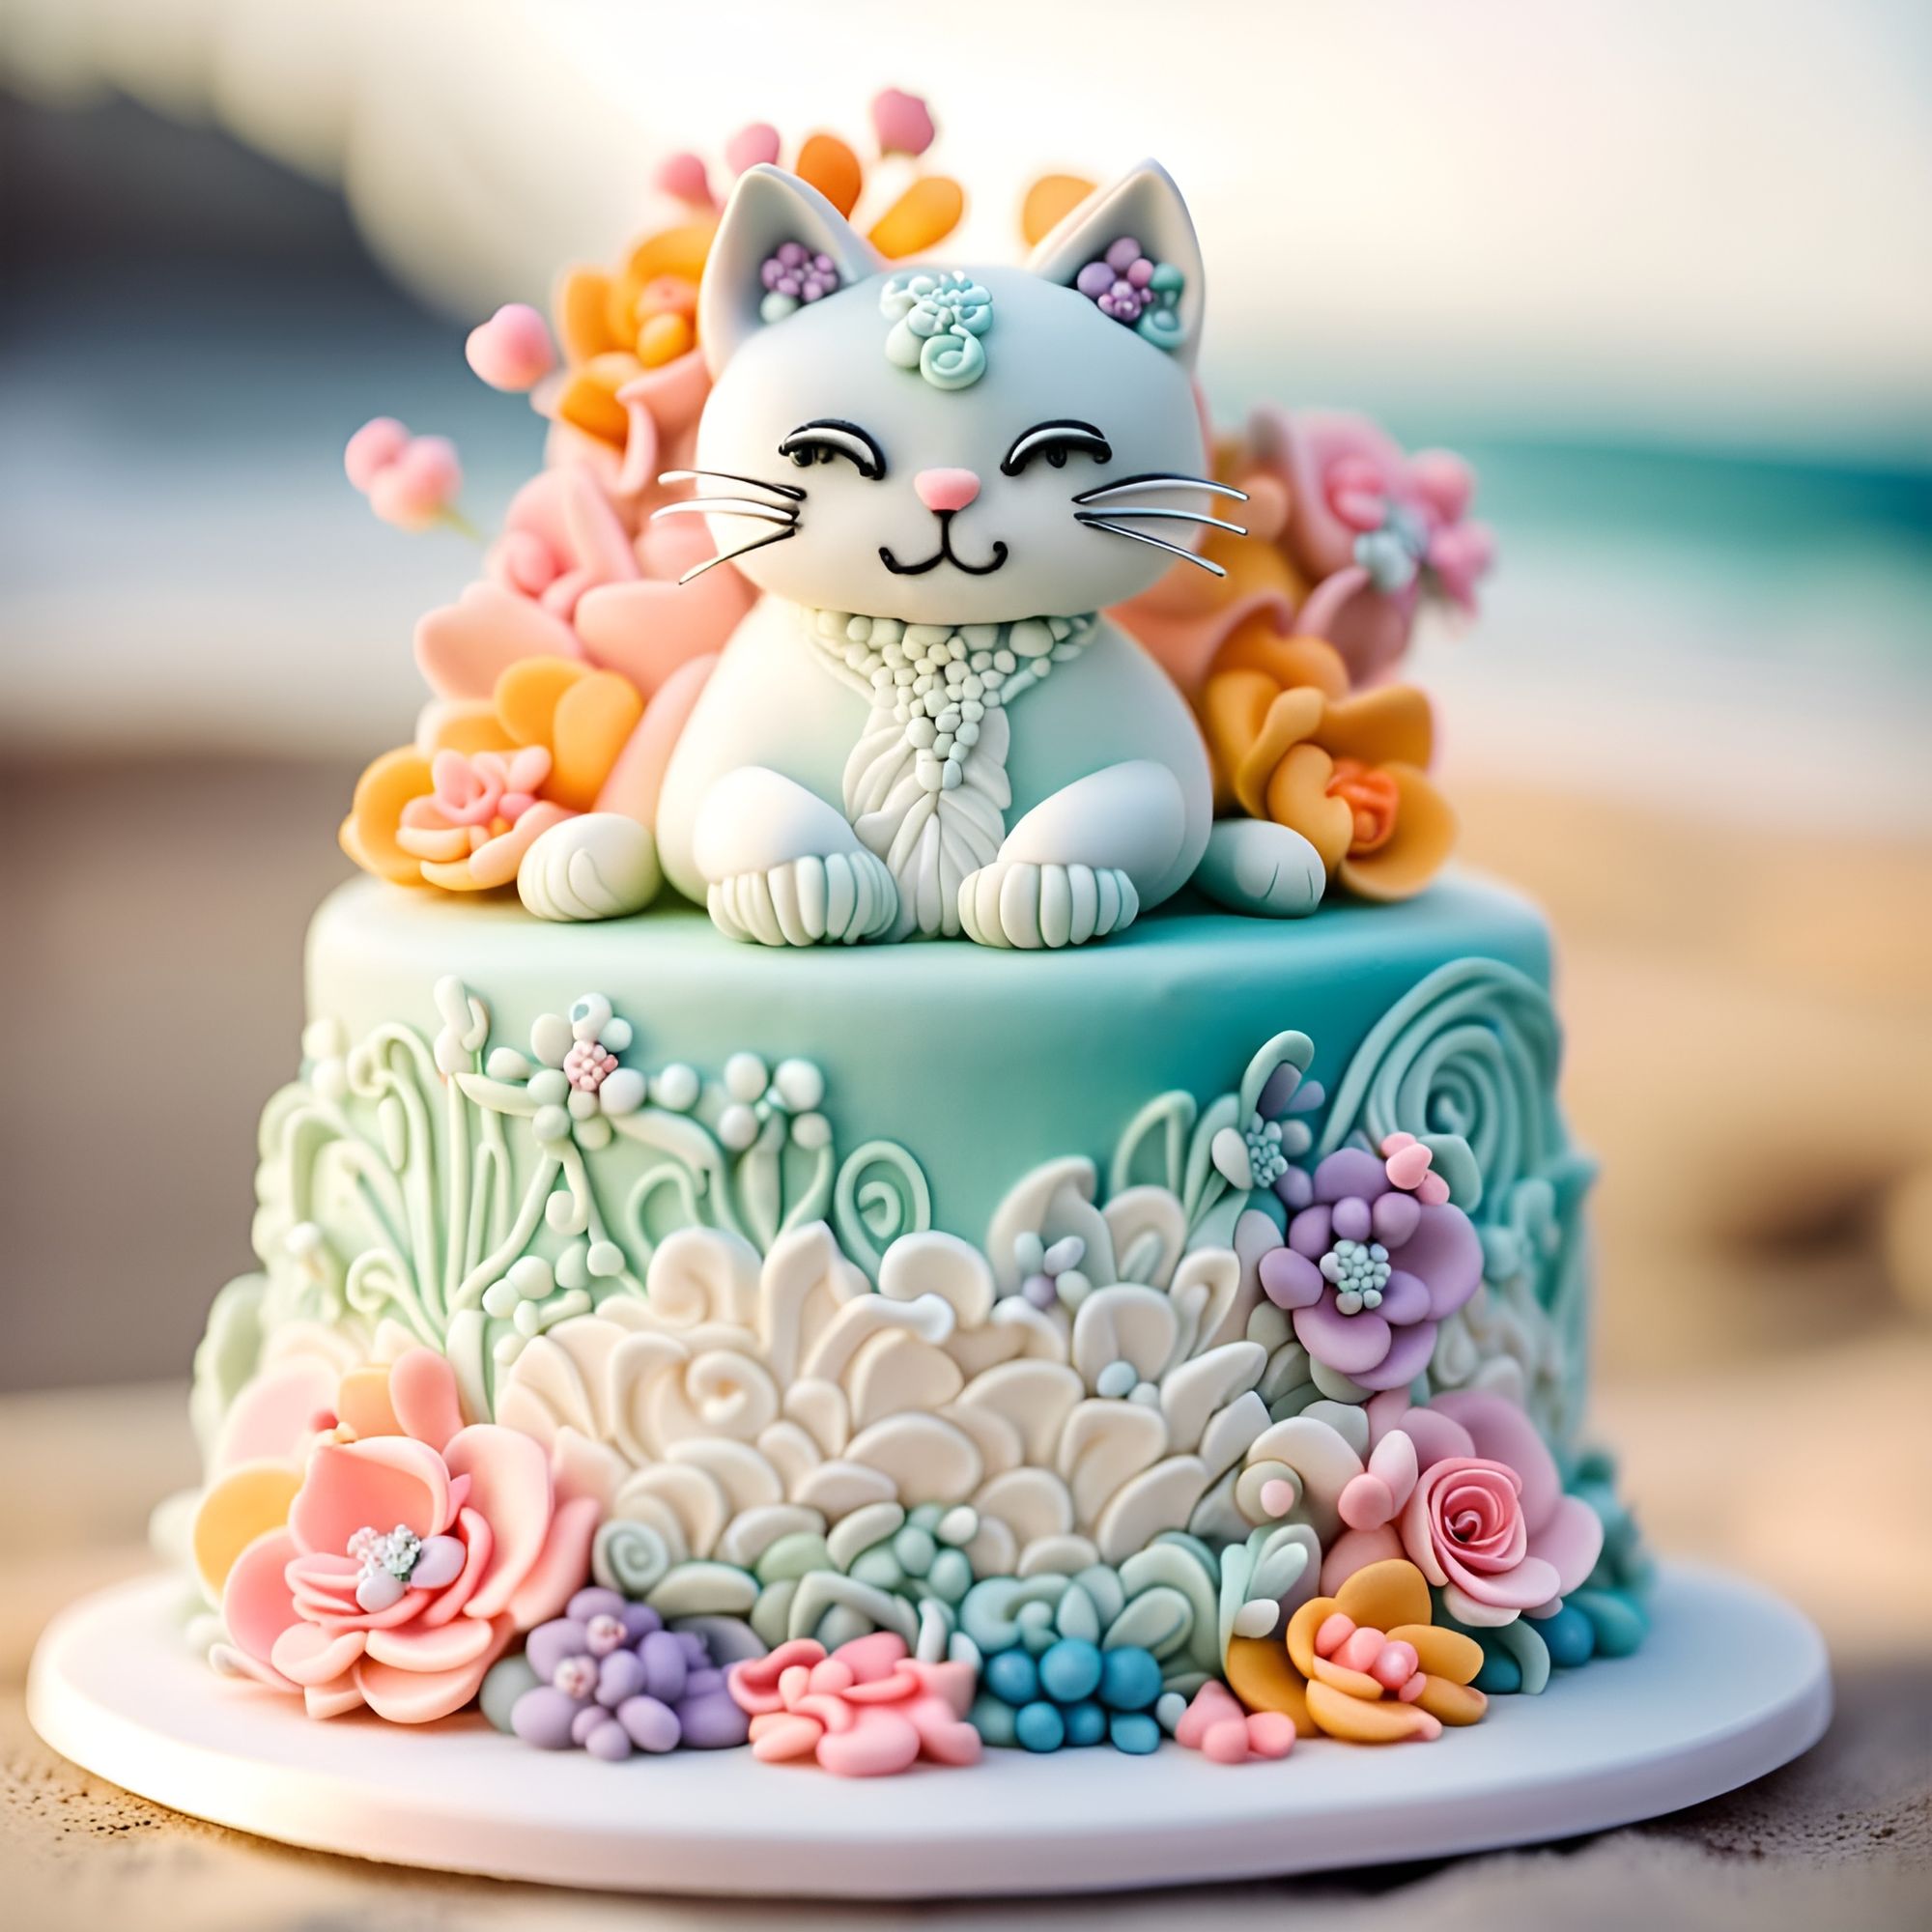 Cute Buttercream Cat Cake - CakeCentral.com